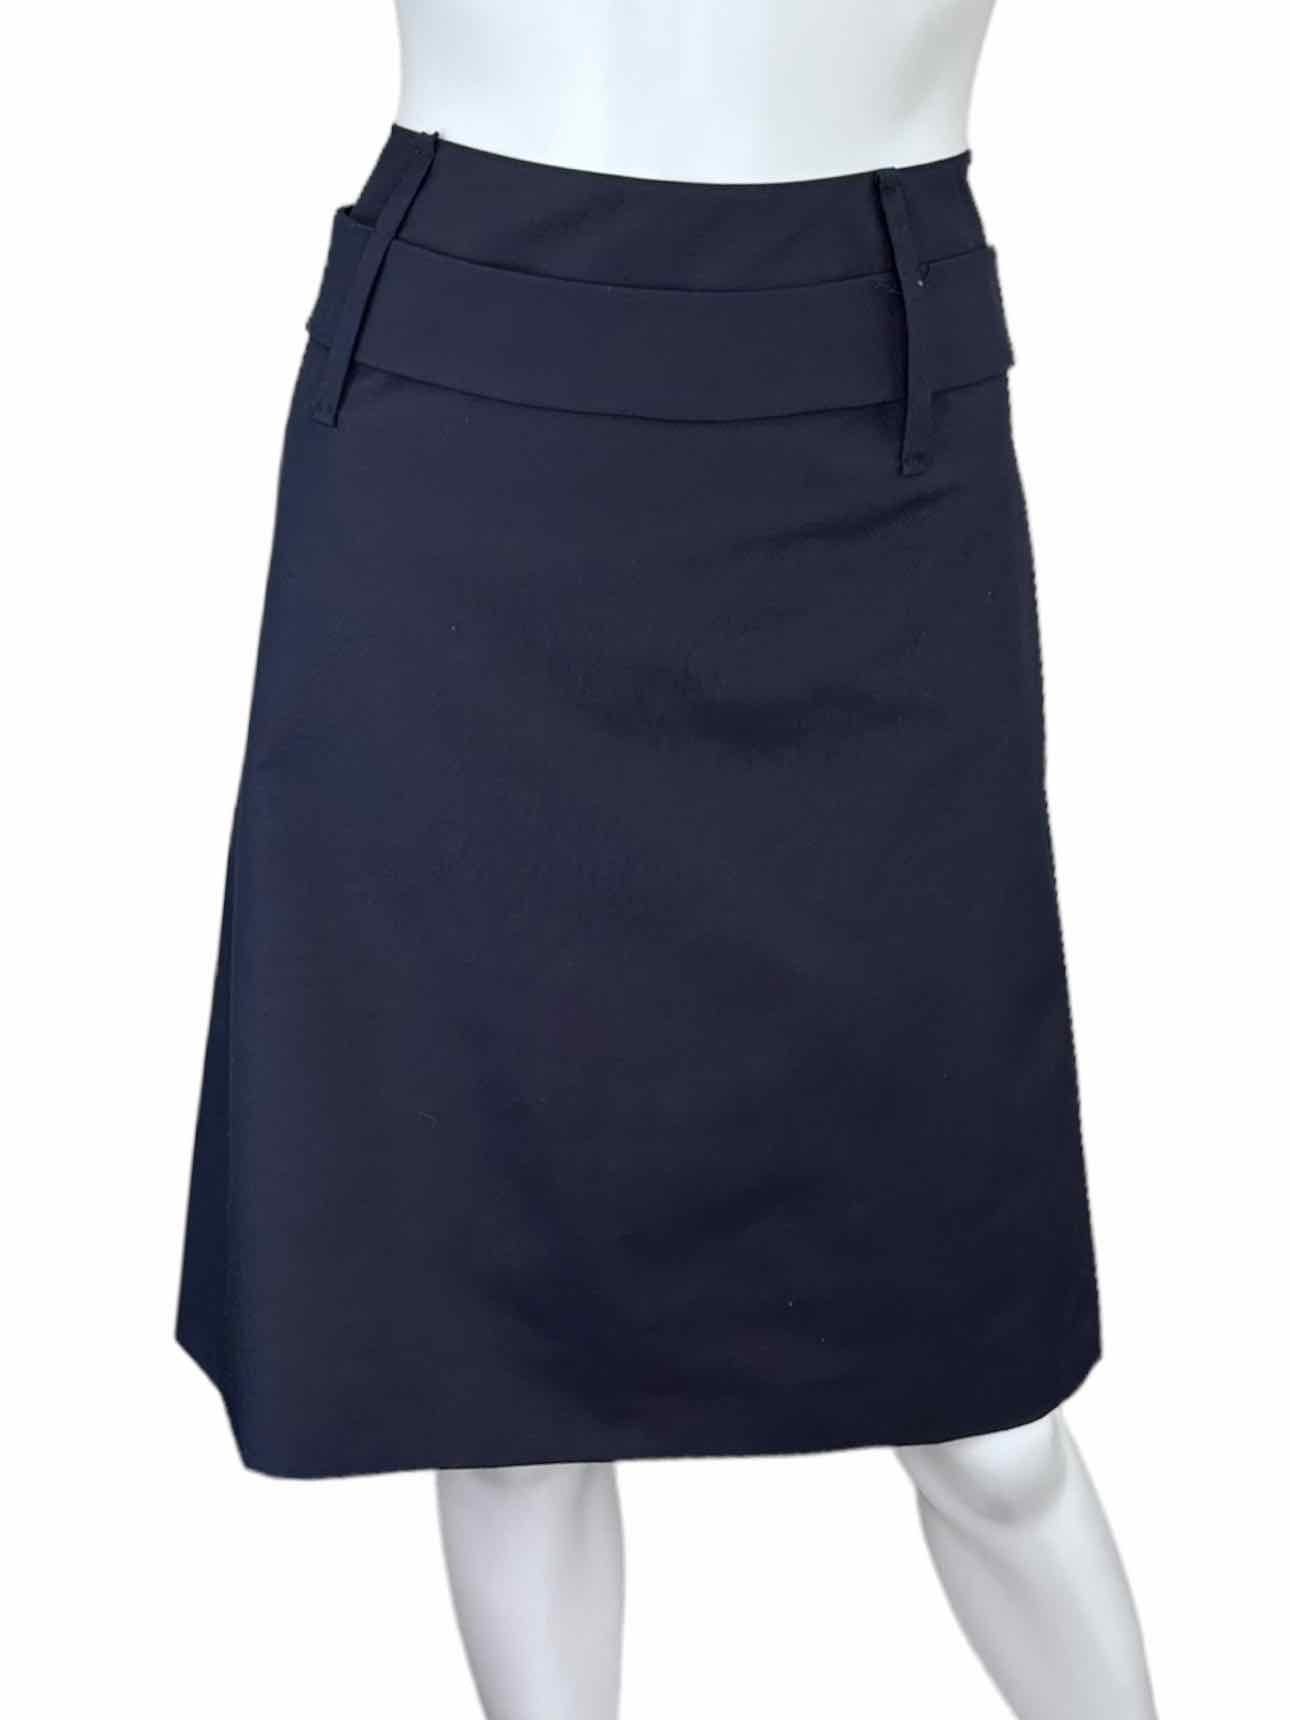 PRADA Navy Pencil Skirt Size 42